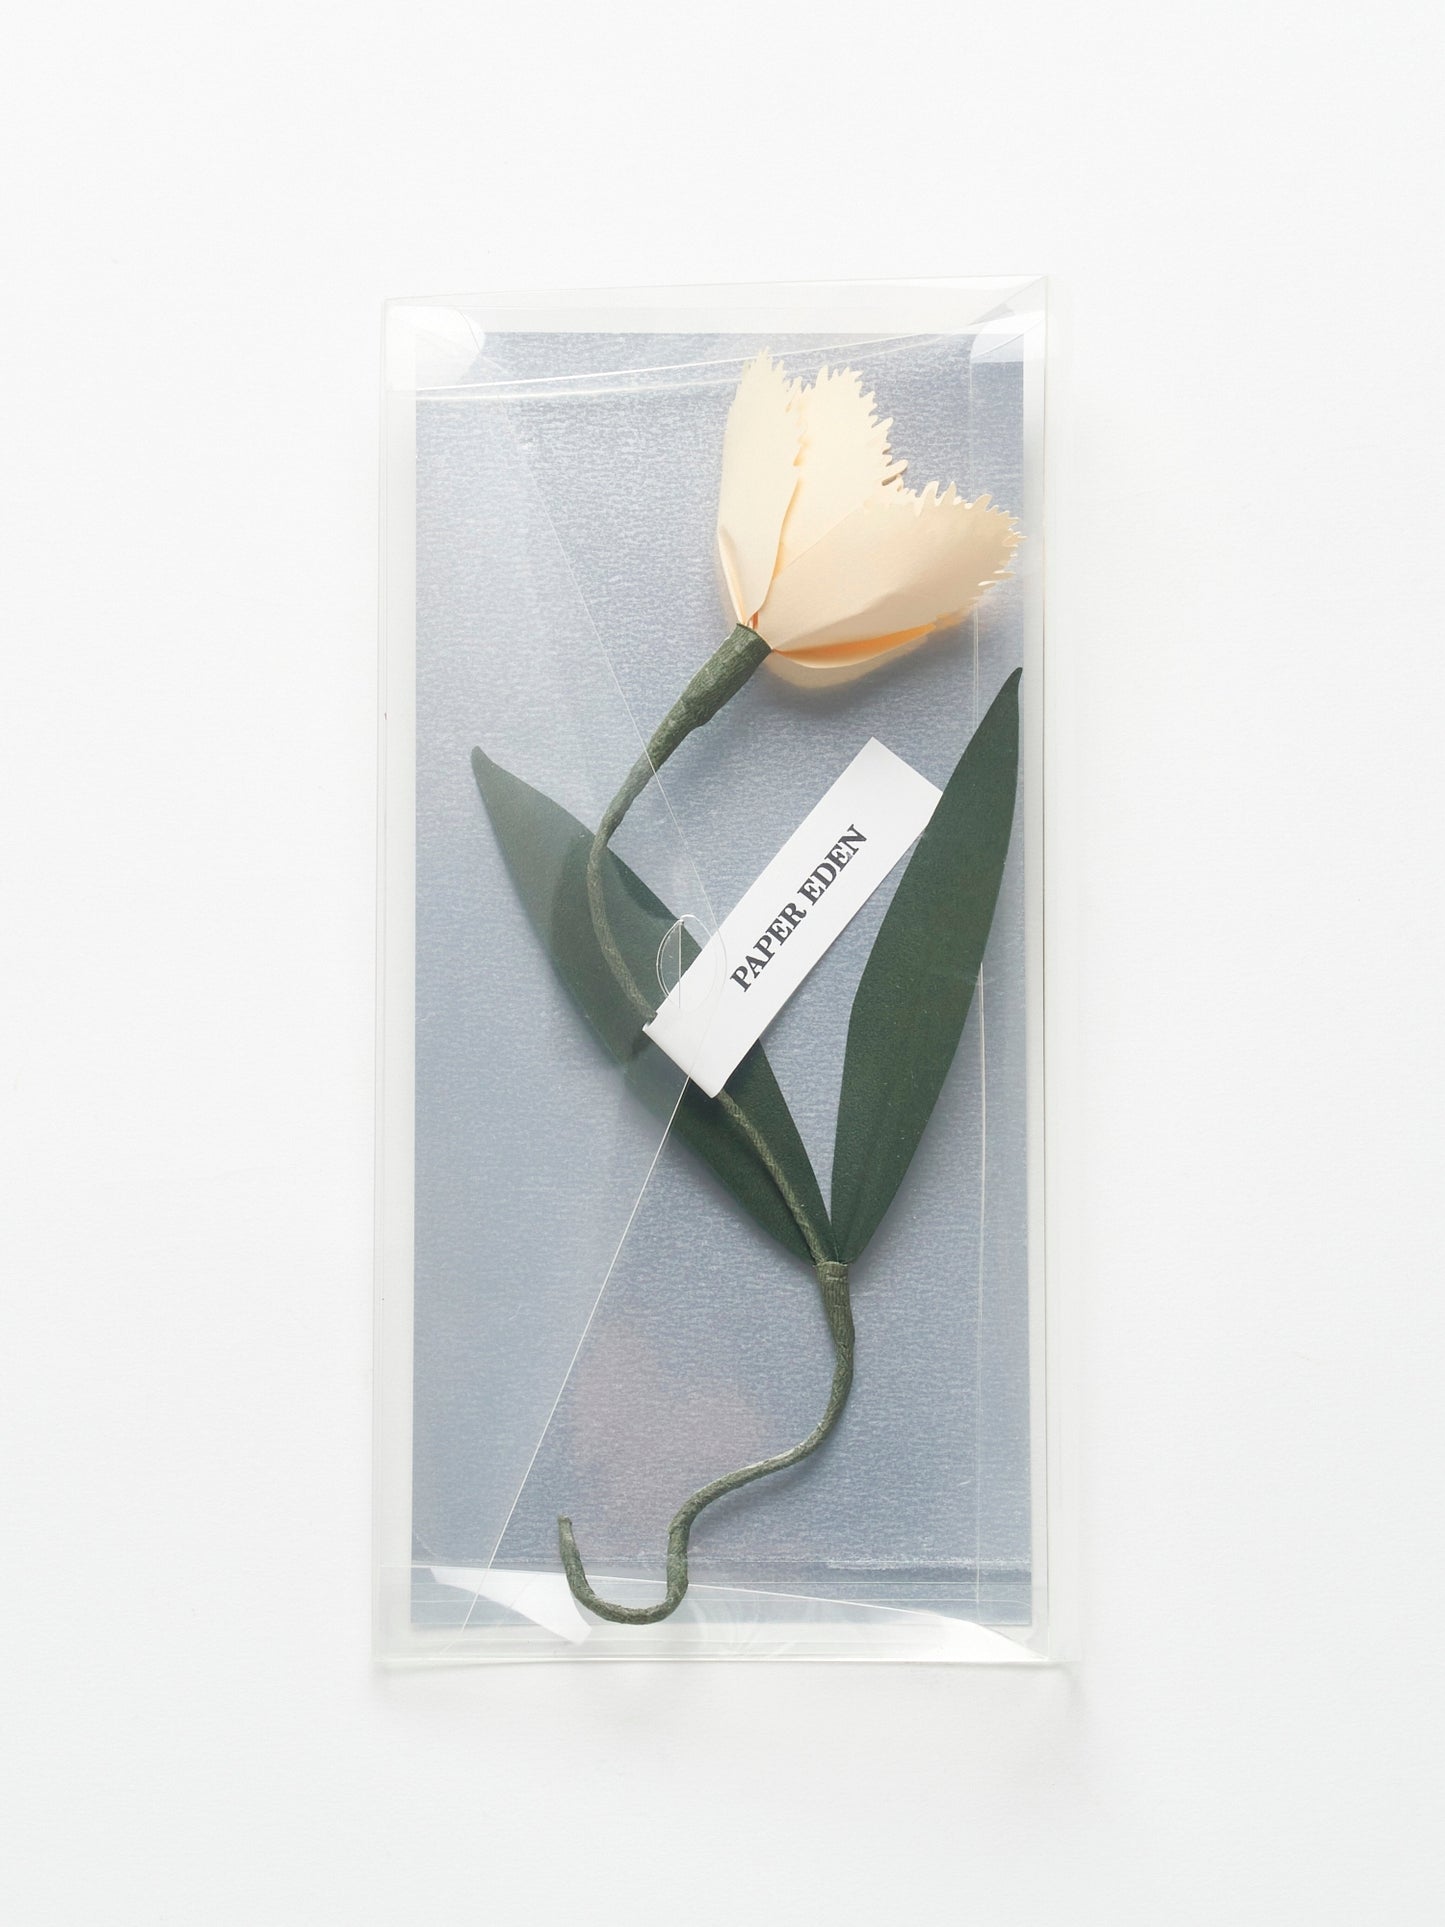 POST FLOWER “PAPER EDEN:Tulip”